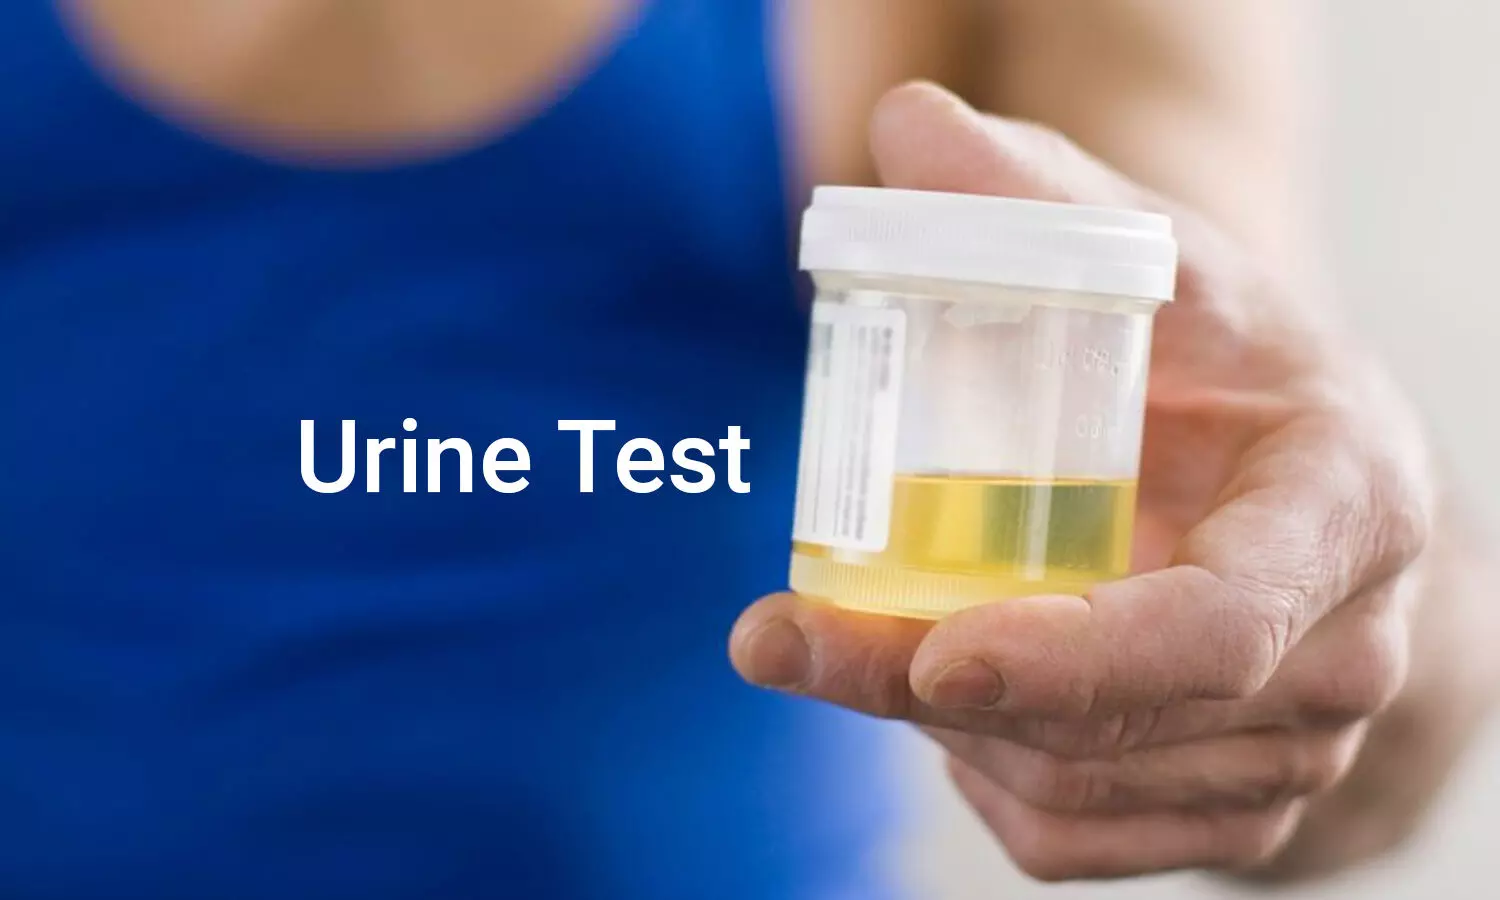 Prostate cancer urine test identifies good prognosis patients